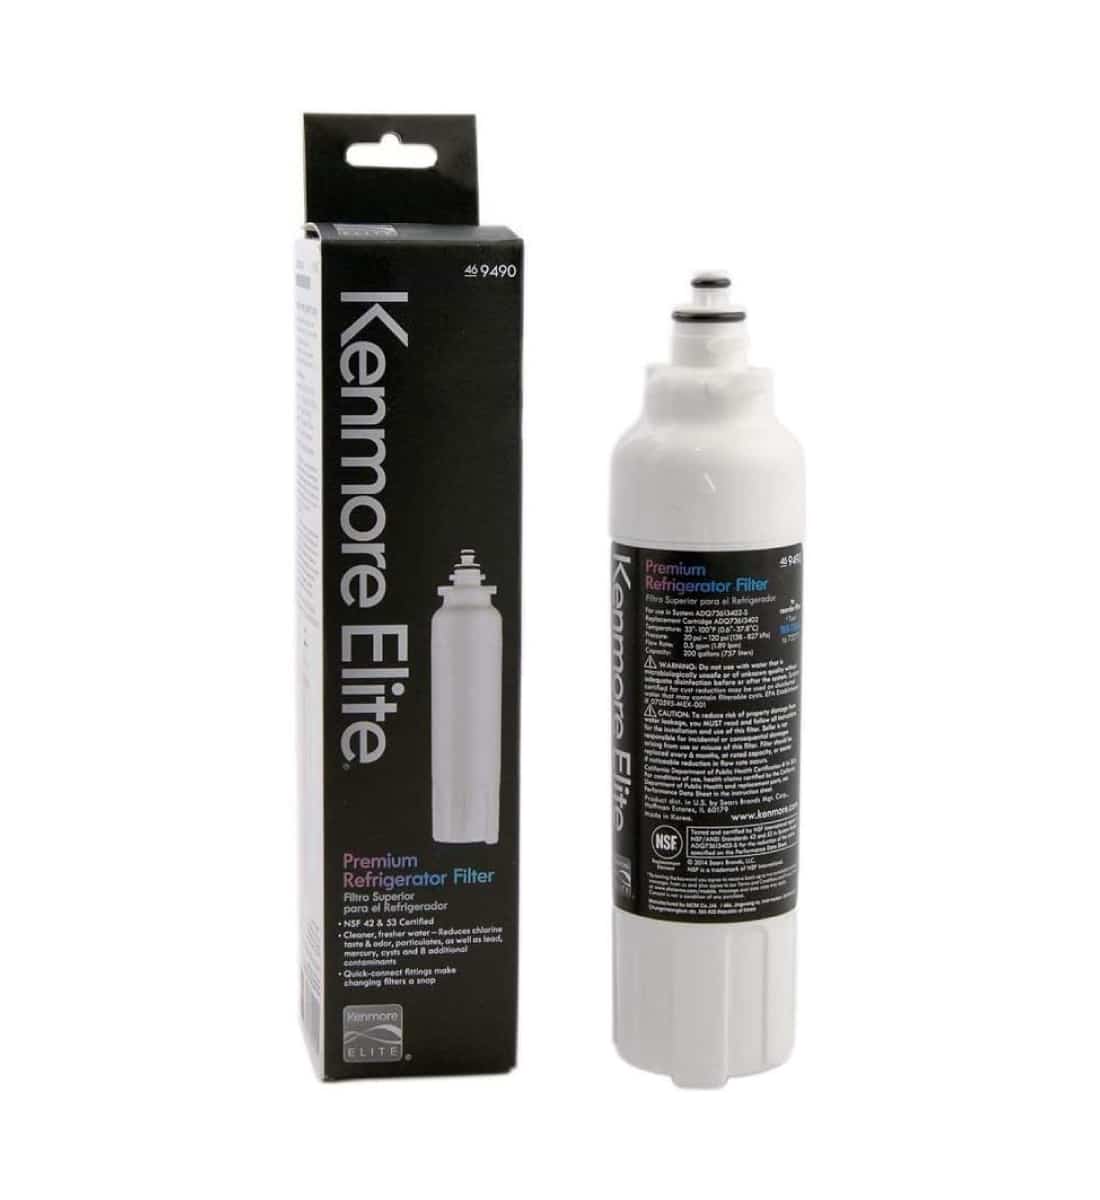 Kenmore Elite 46-9490 Refrigerator Water Filter for sale online